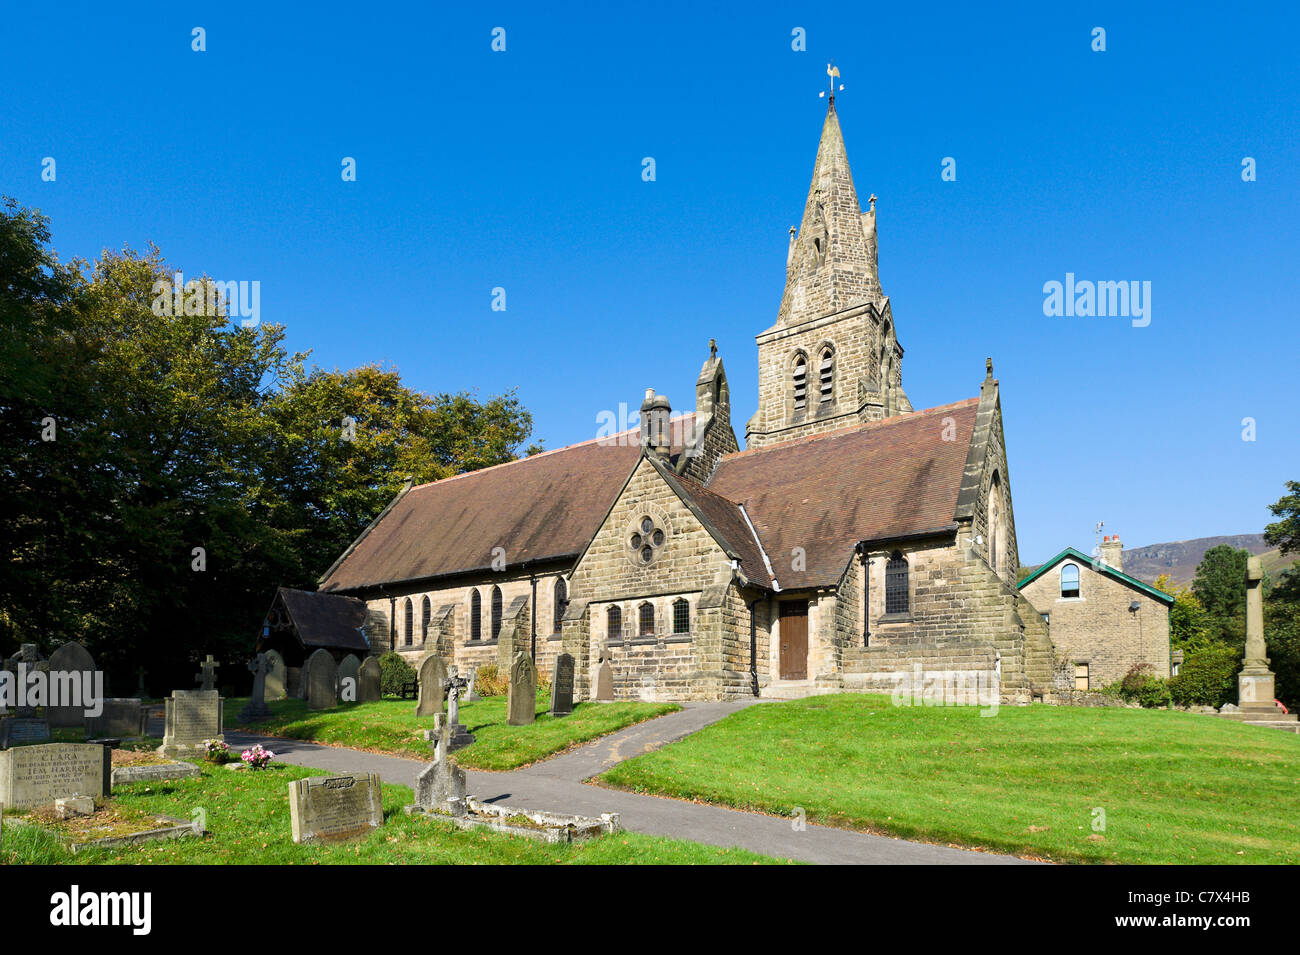 The village church in Edale, Peak District National Park, Derbyshire, England, UK Stock Photo